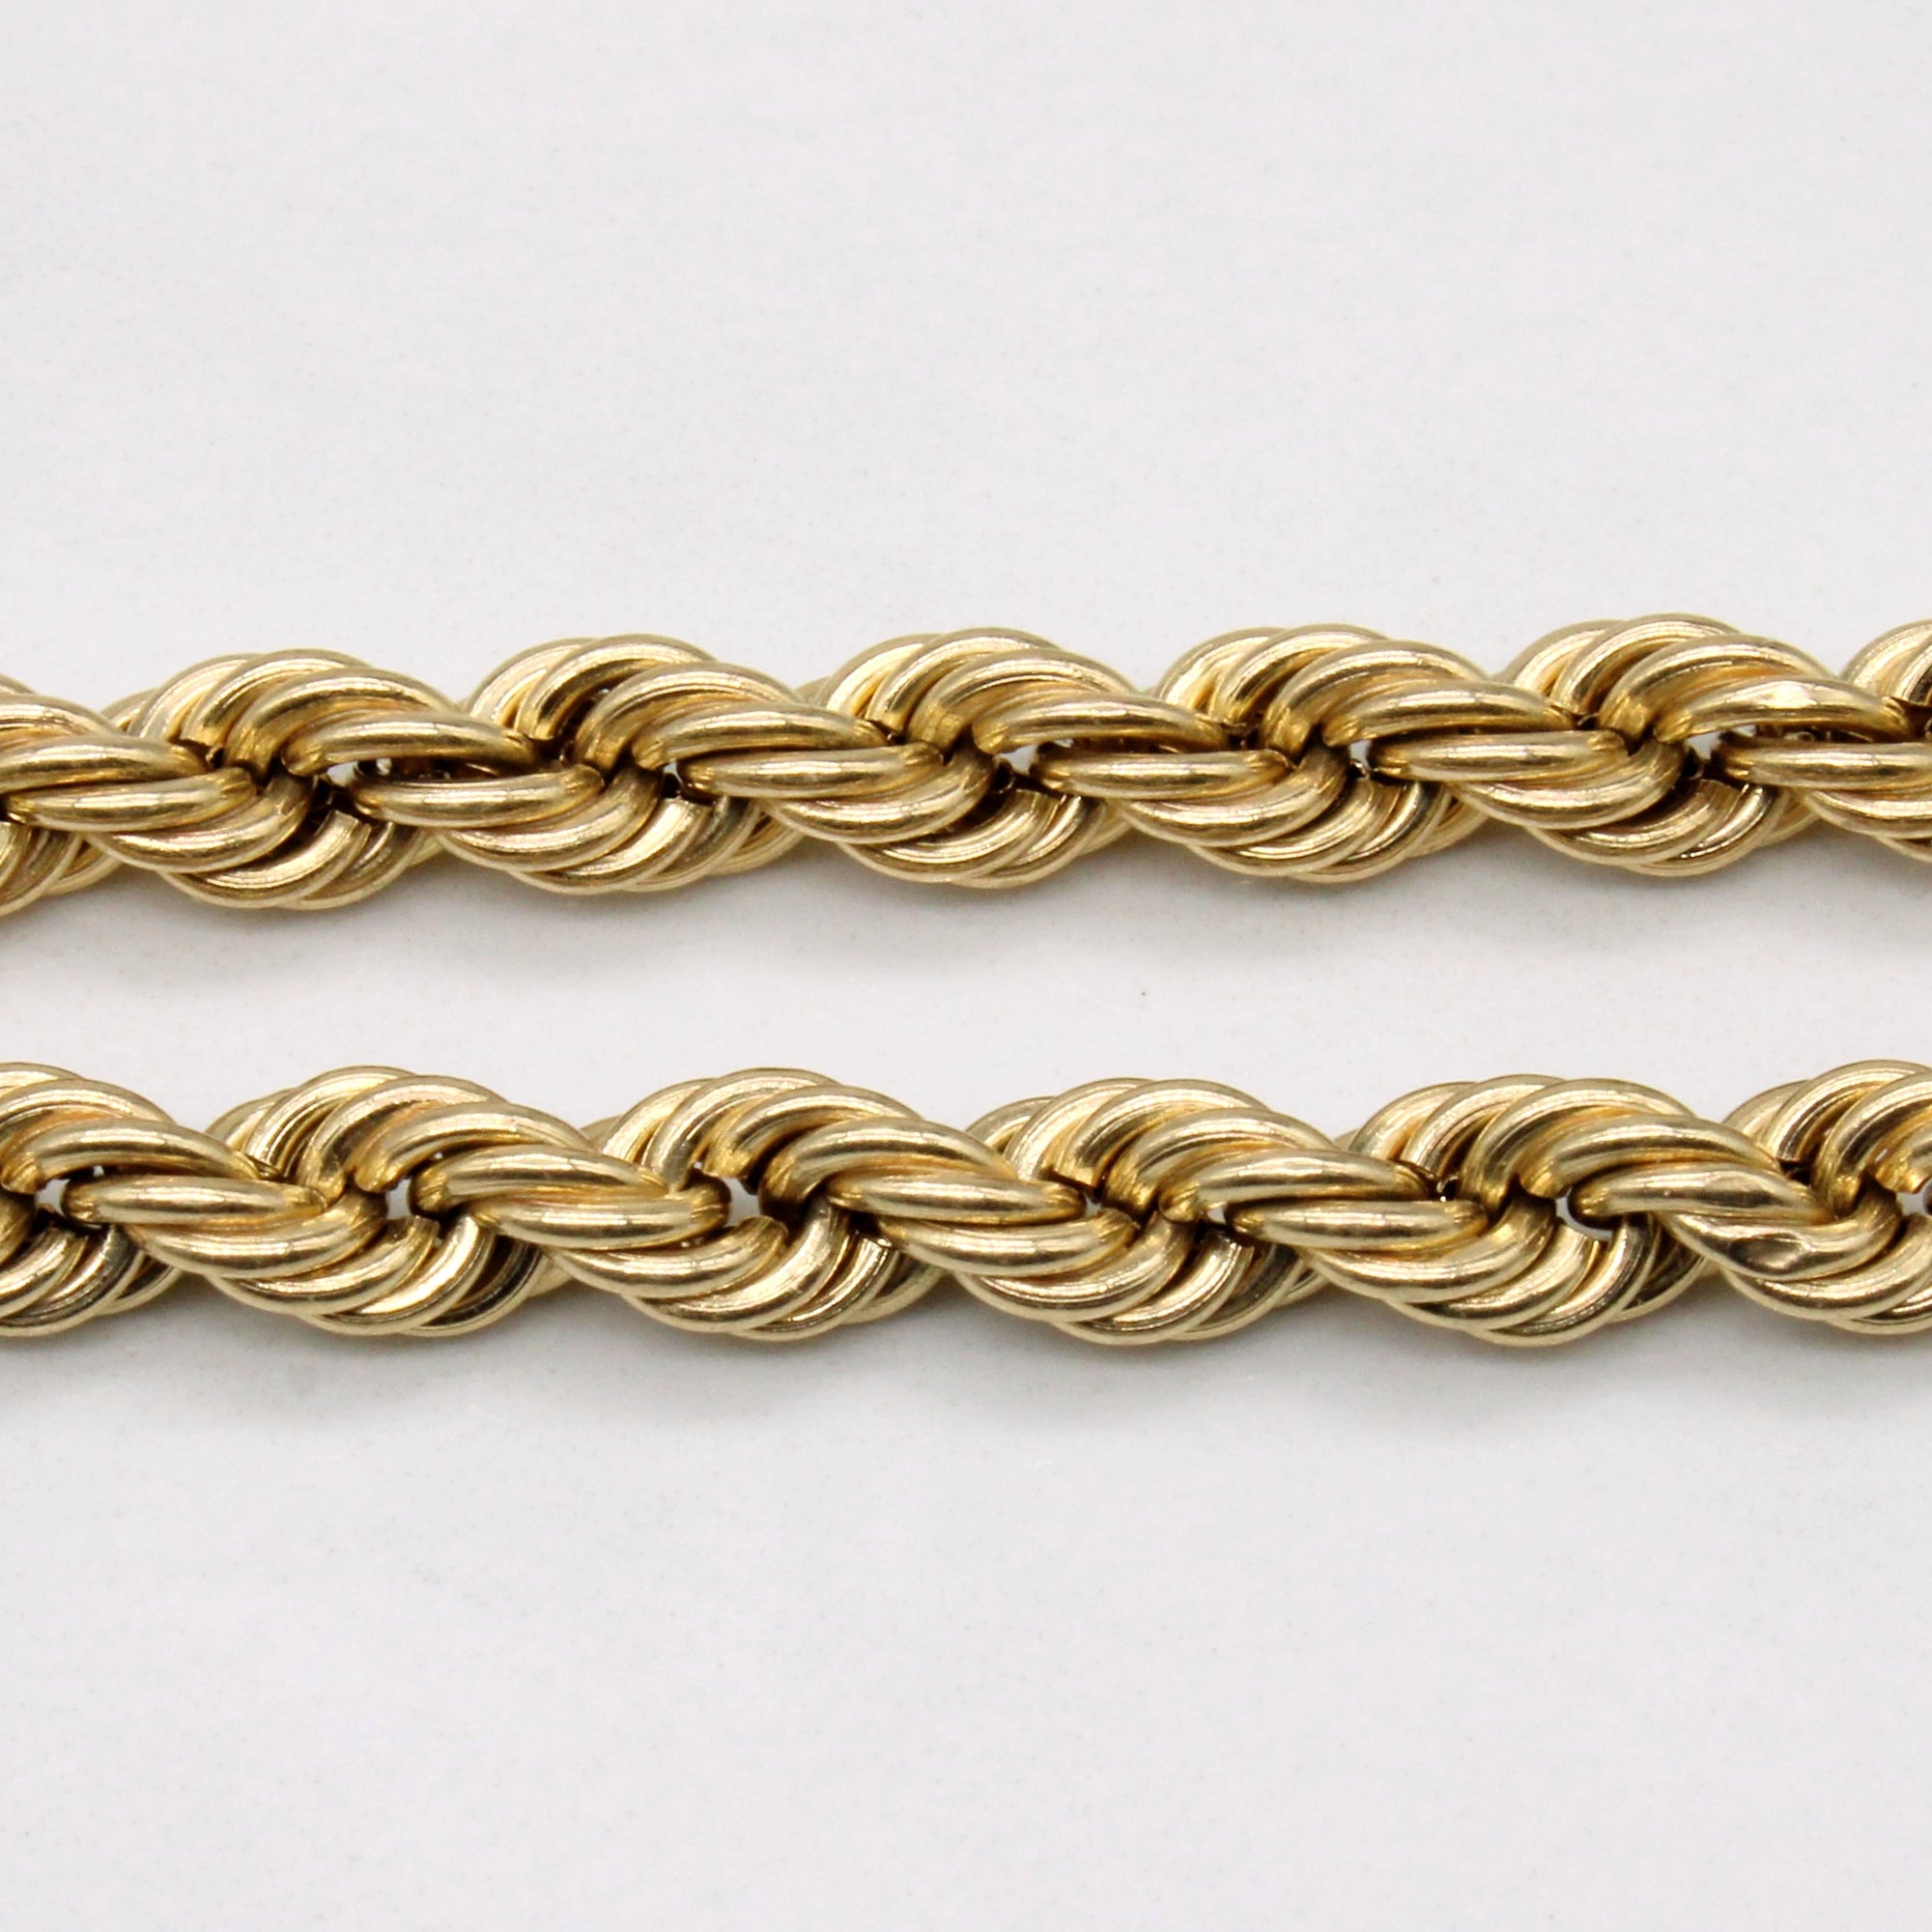 10k Yellow Gold Rope Chain Bracelet | 7.5